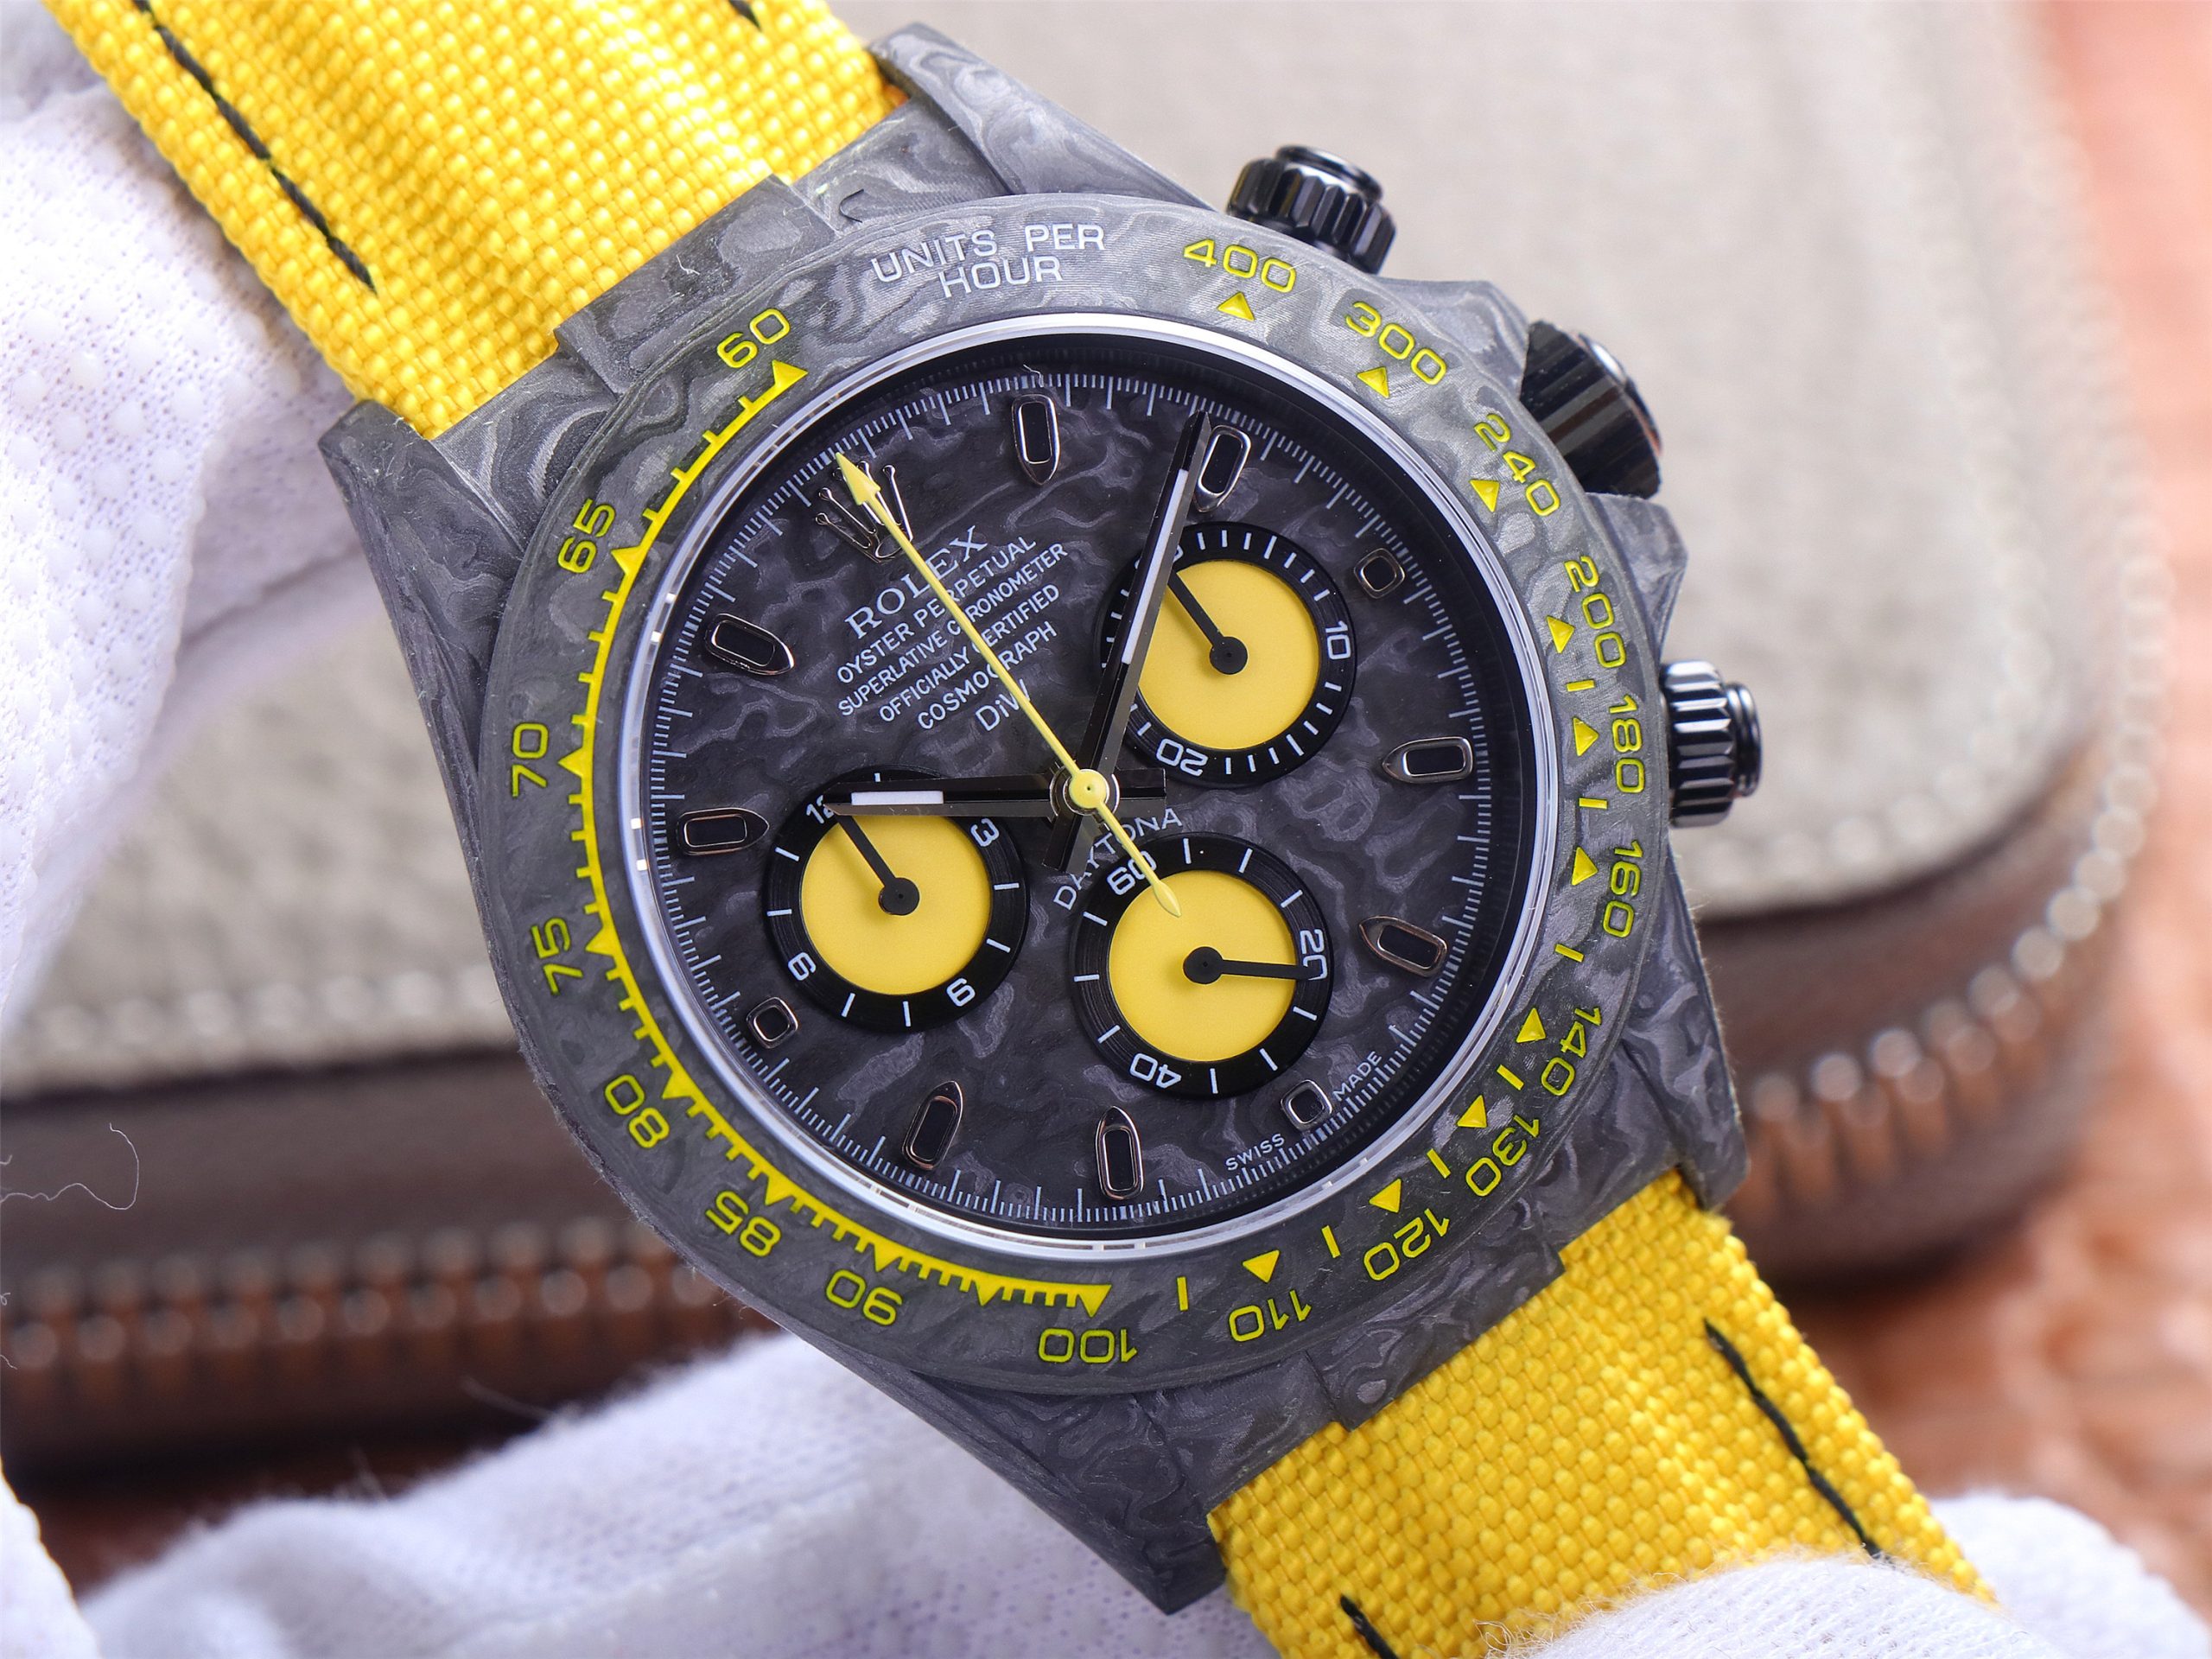 202302120452199 scaled - 高仿彩色迪通拿手錶價格 JH廠手錶勞力士迪通拿碳纖維定制版 復刻錶￥4580